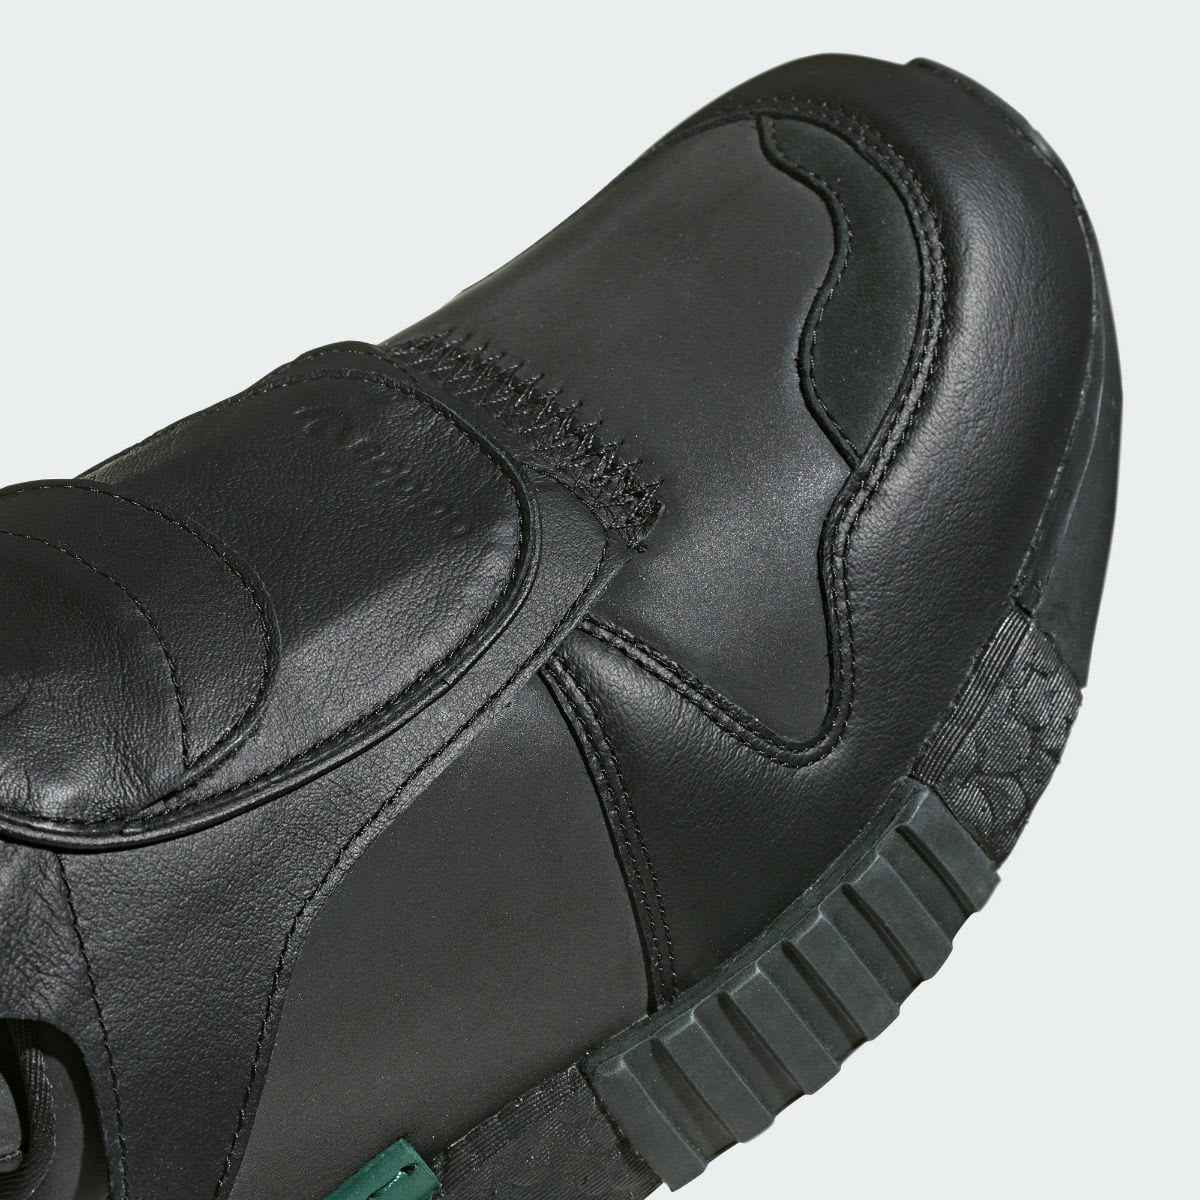 Adidas Futurepacer Black Release Date B37266 Toe